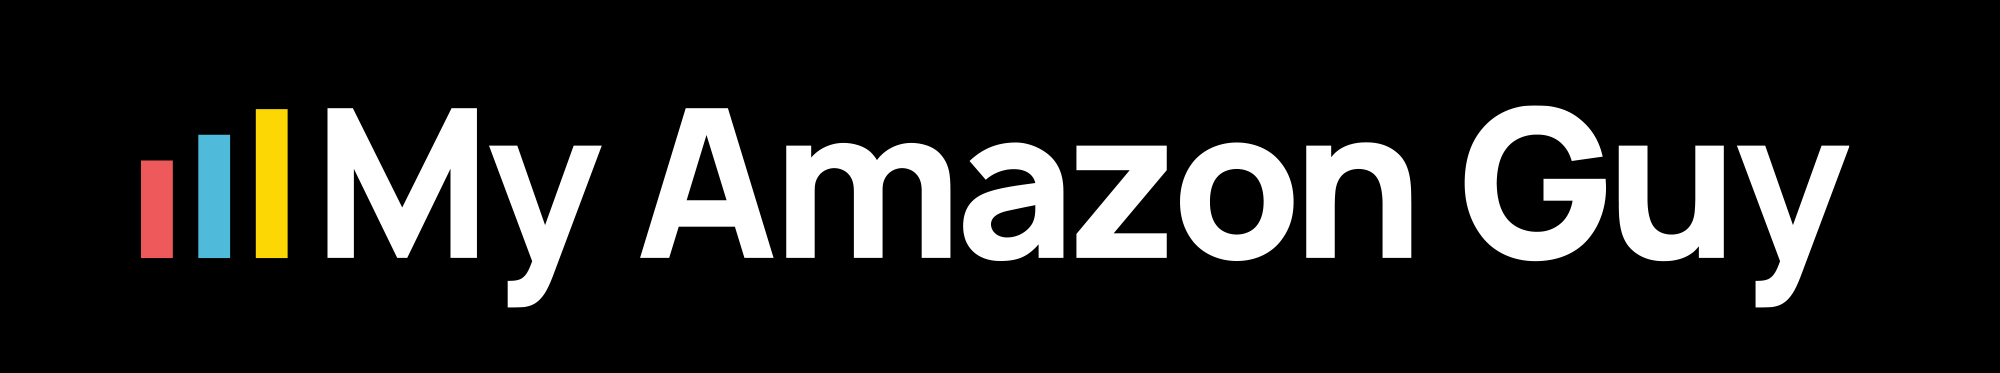 My Amazon Guy Logo